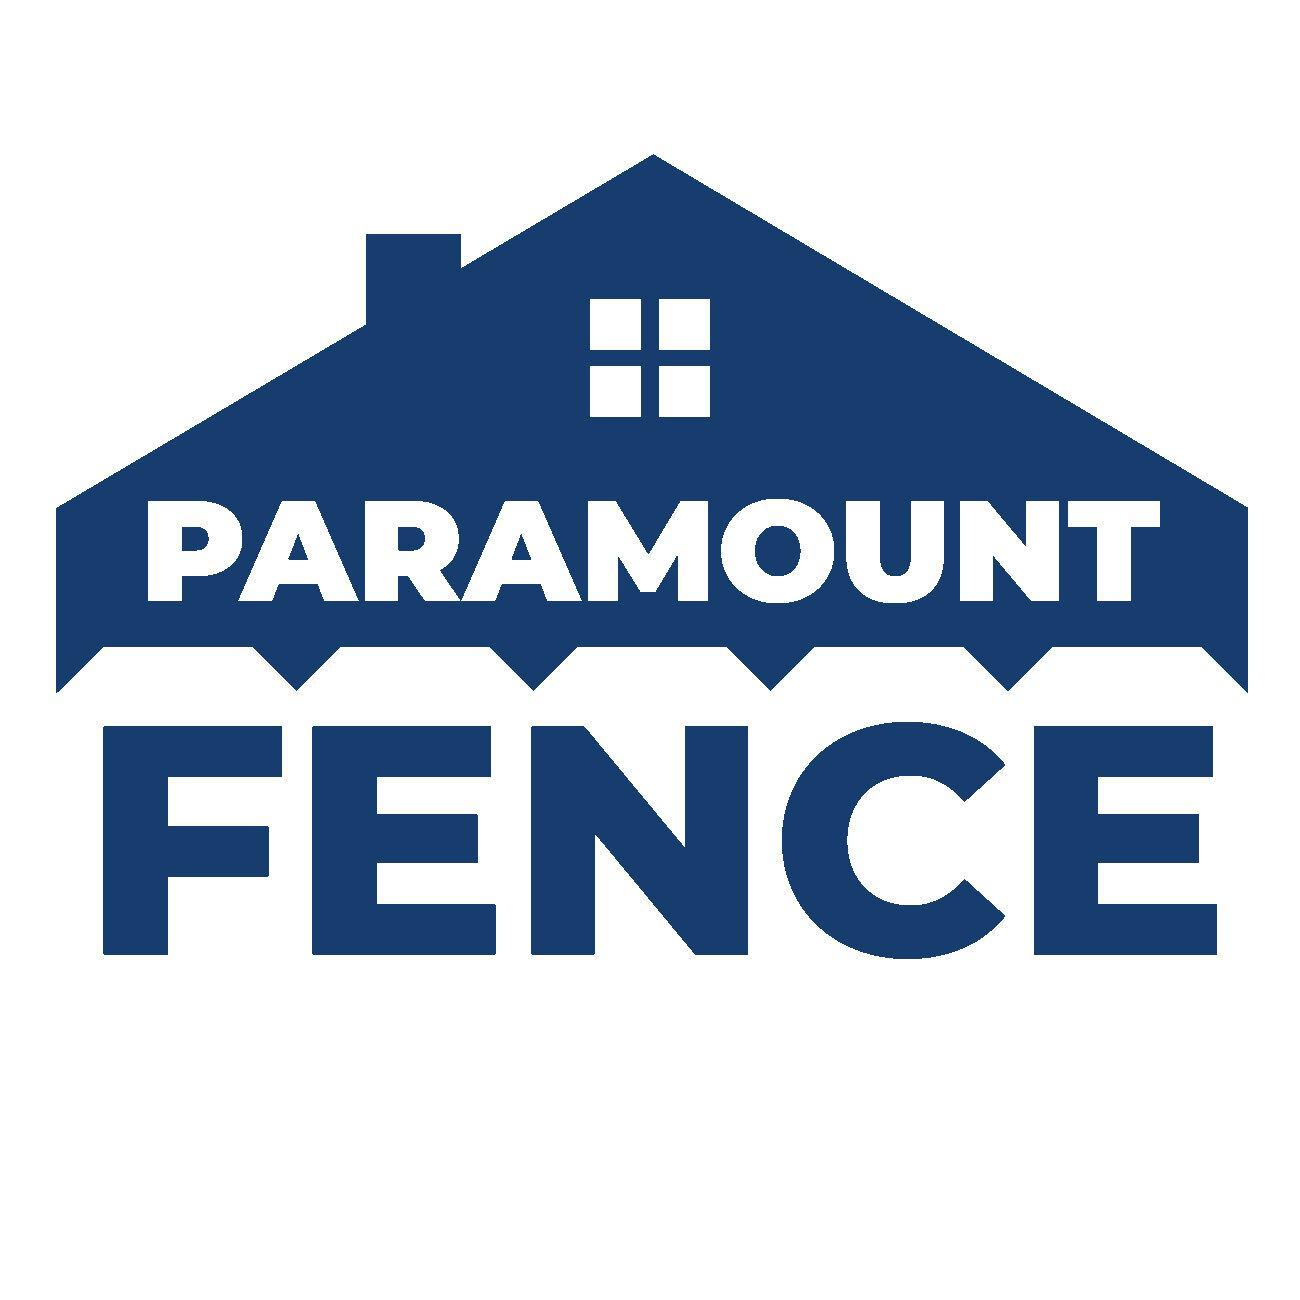 Paramount Fence